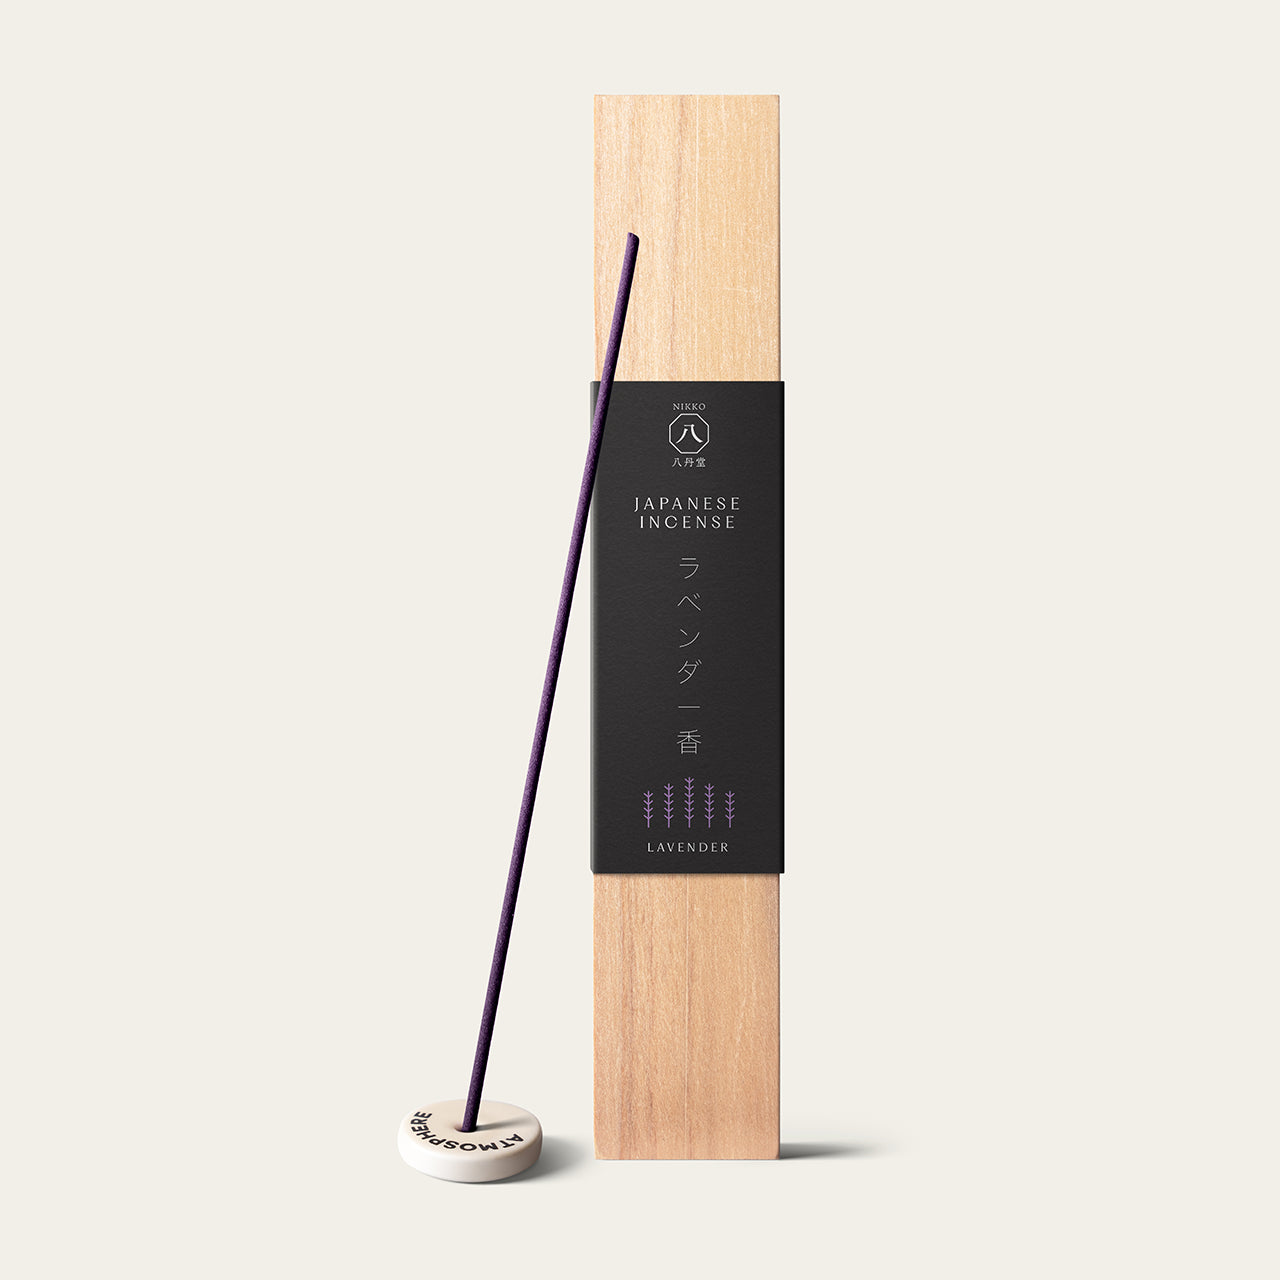 Hattando Nikko Classic Lavender Japanese incense sticks (60 sticks) with Atmosphere ceramic incense holder